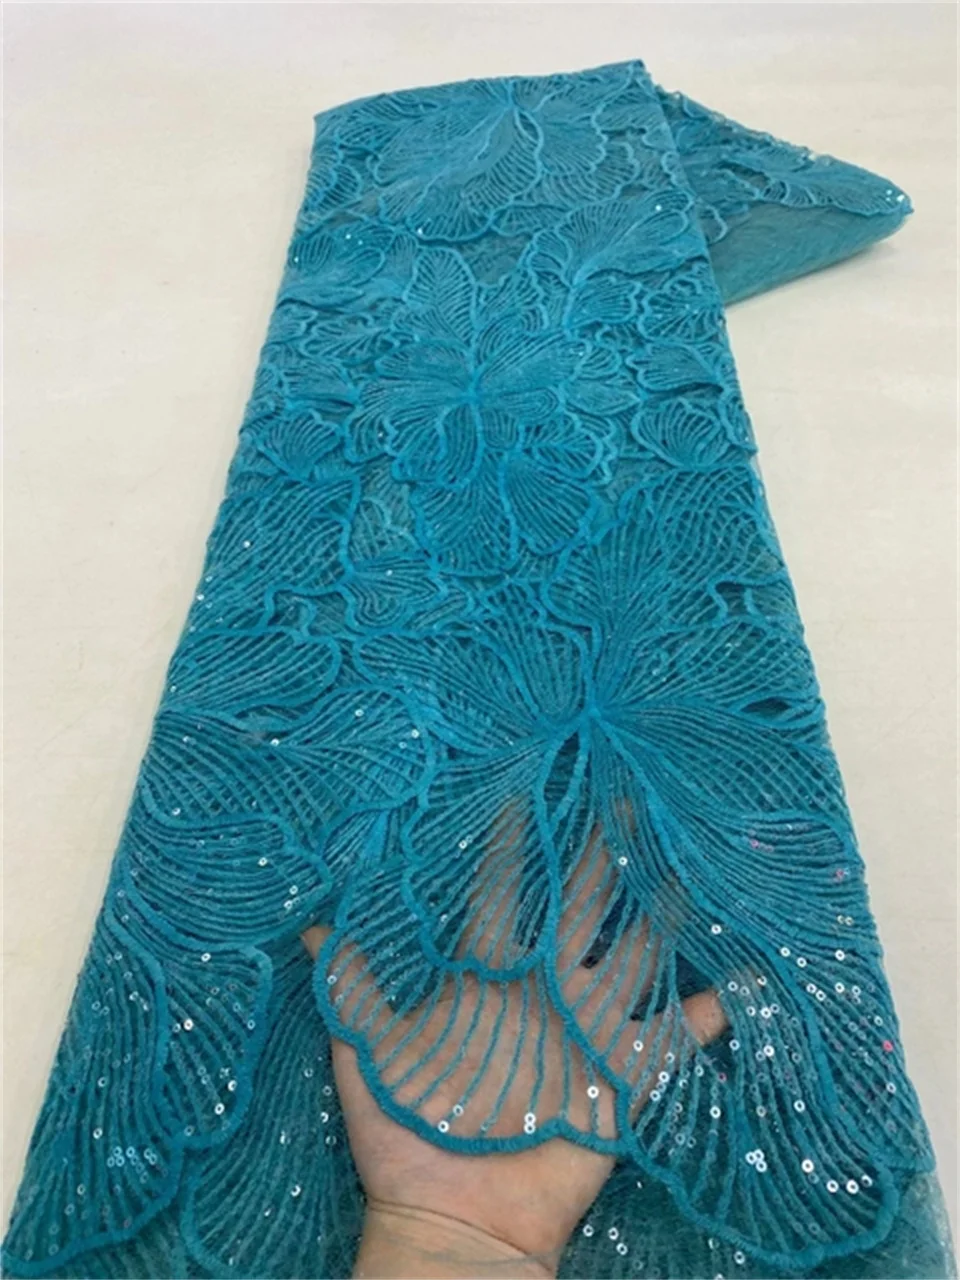 PGC-tela de encaje de lentejuelas africanas, tejido de red bordado nigeriano francés de alta calidad para vestido de novia, costura LY2837, 2024